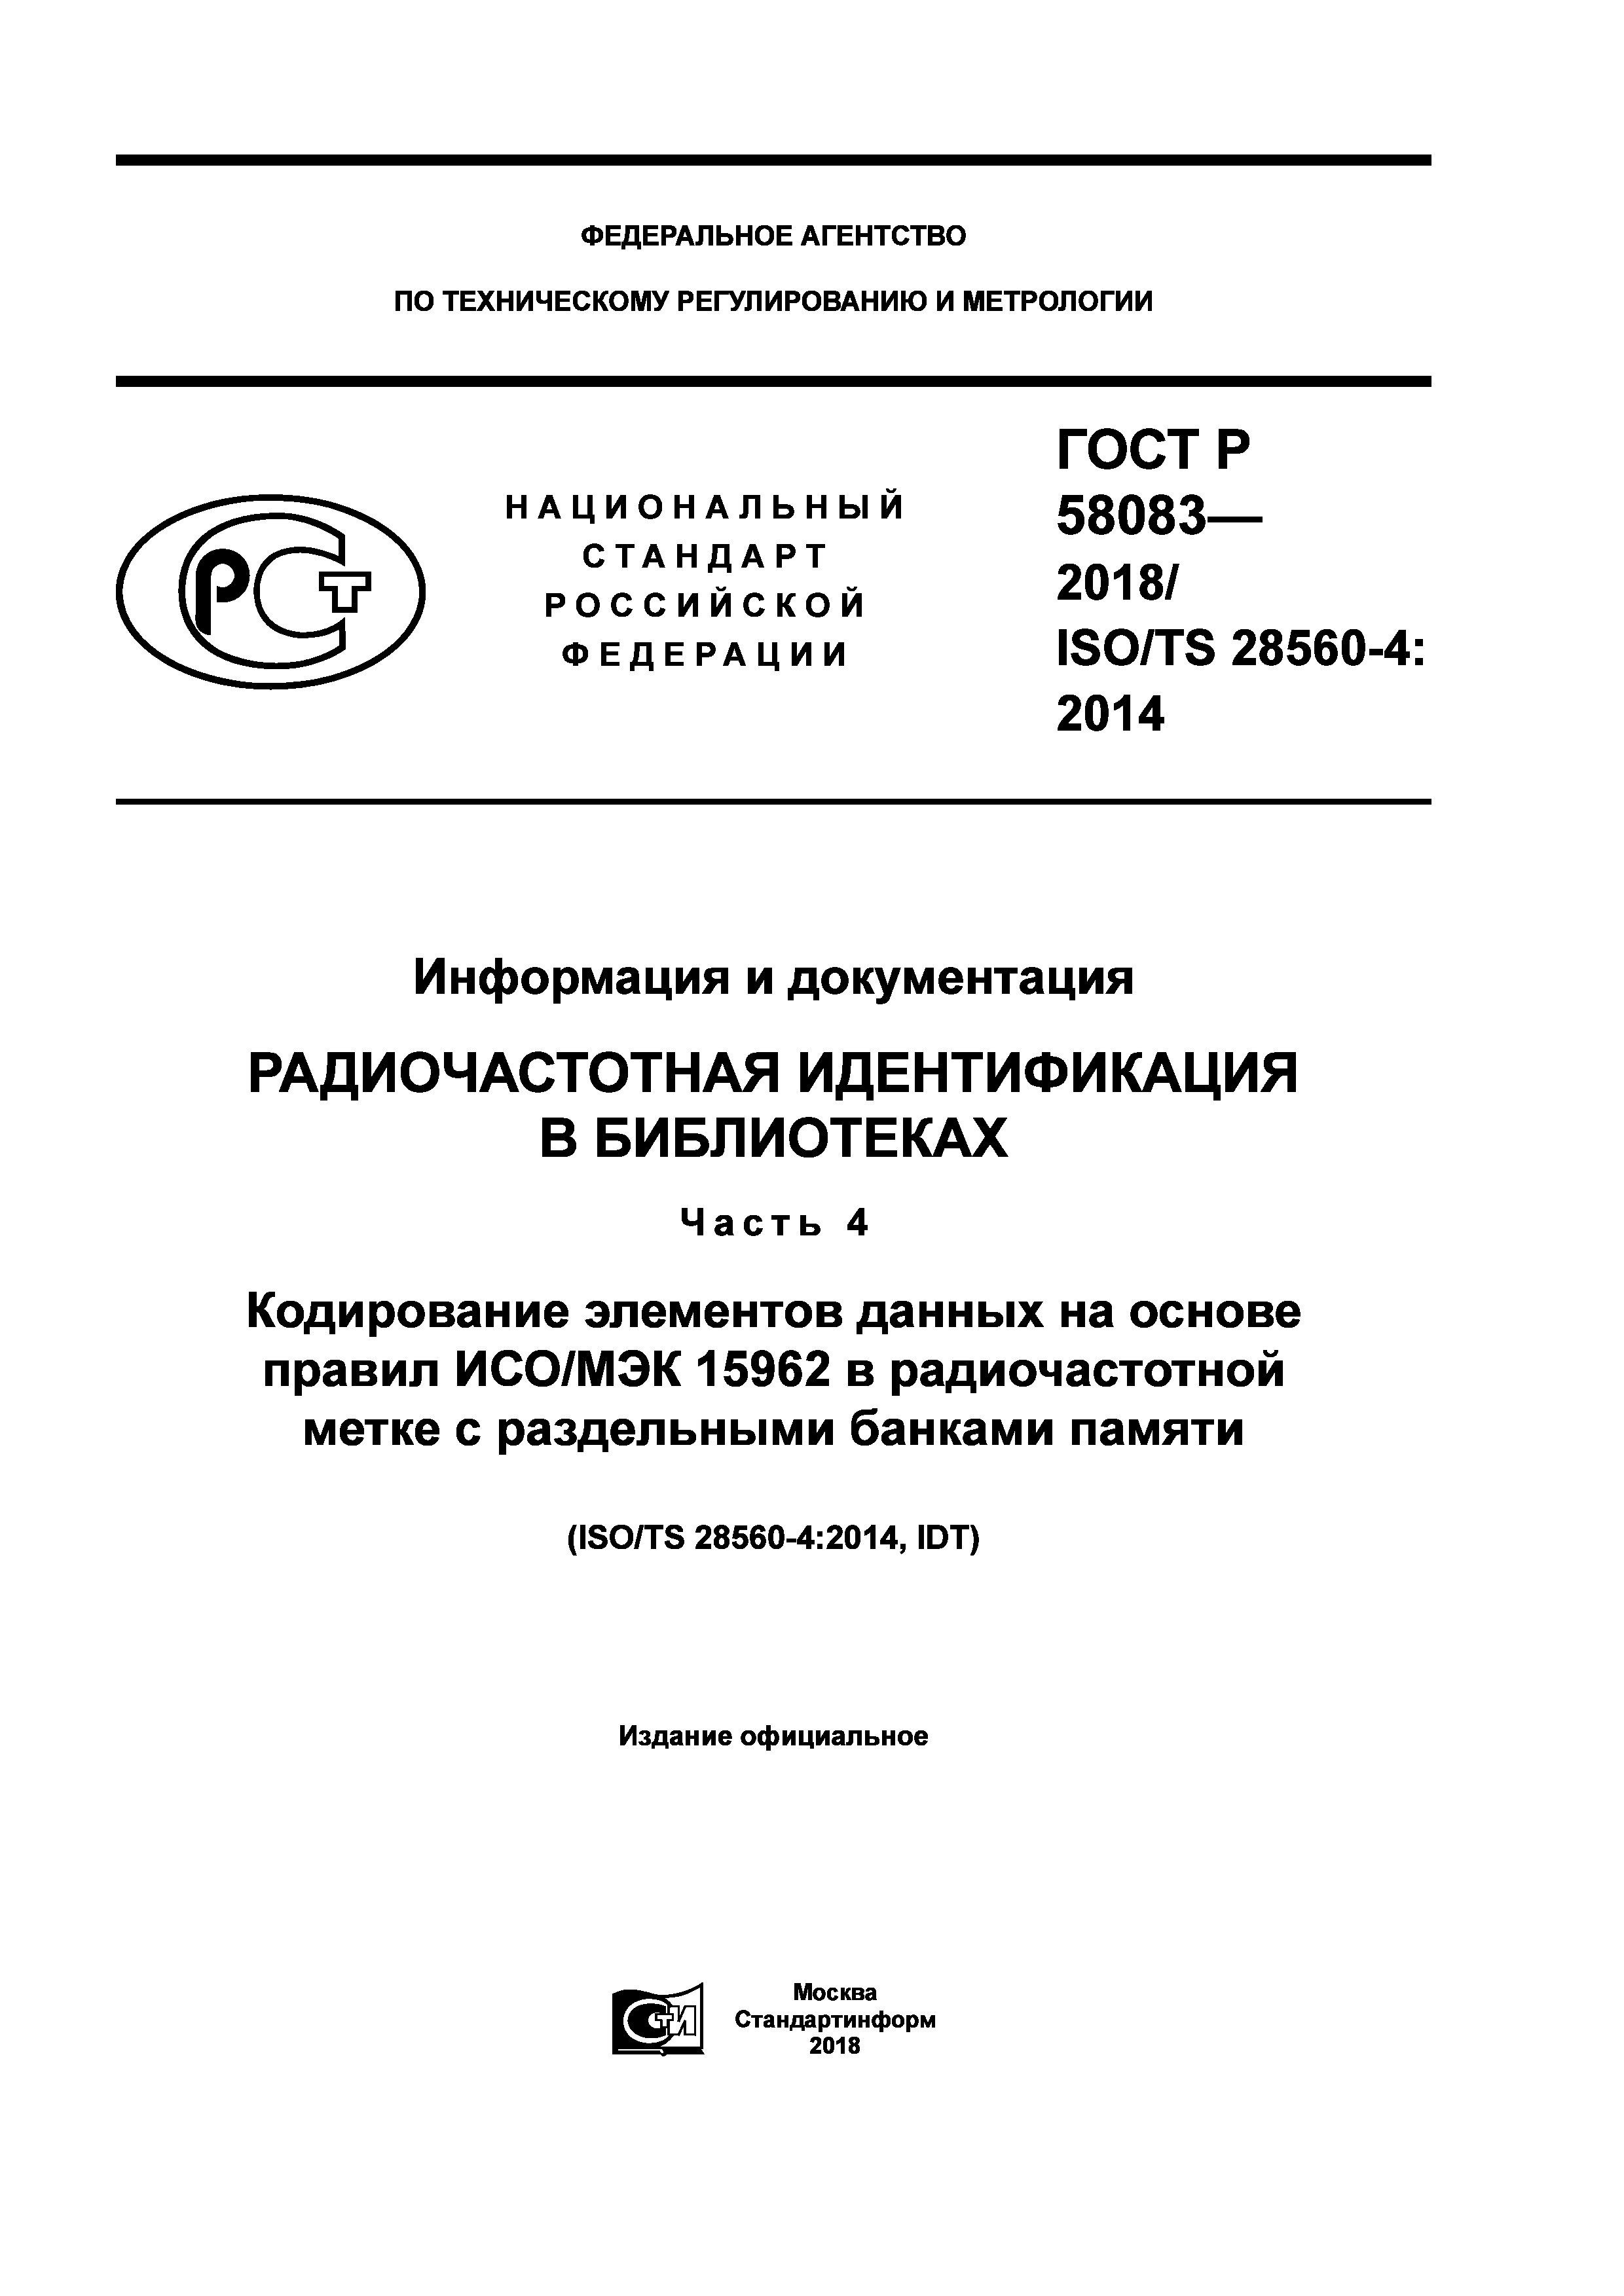 ГОСТ Р 58083-2018